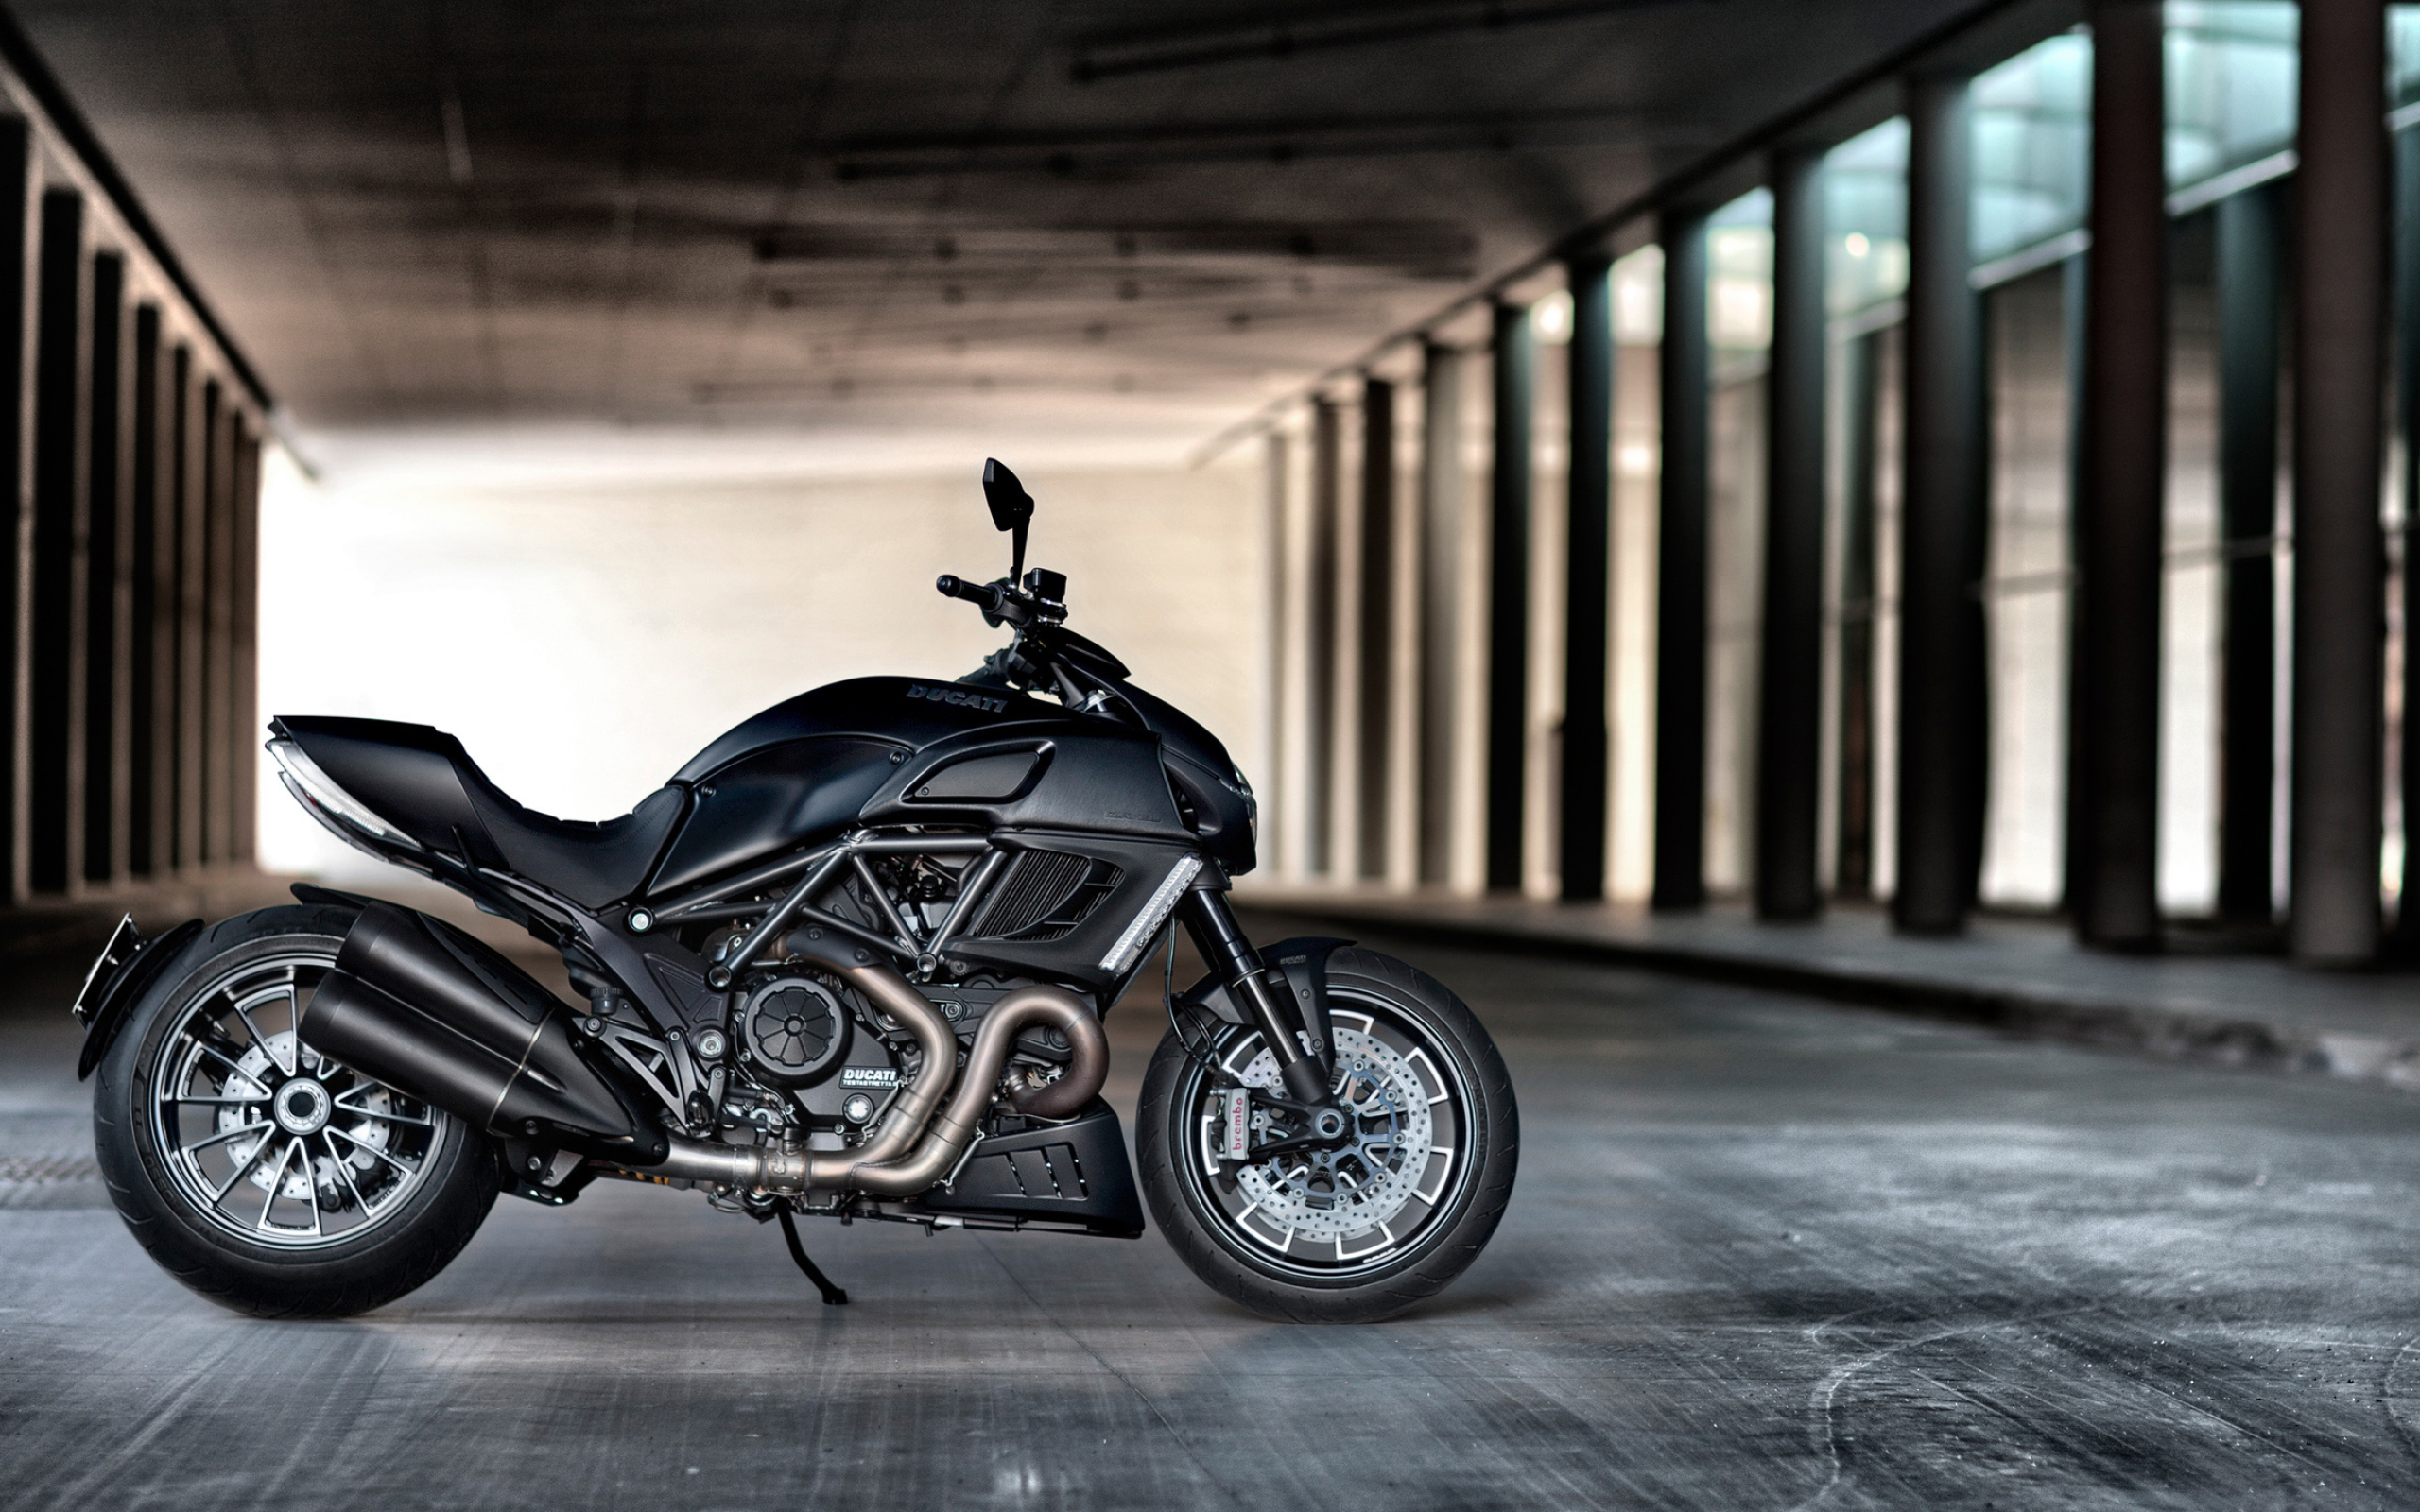 Ducati XDiavel, Ultra HD desktop wallpapers, Stunning visuals, Motorcycle artistry, 2560x1600 HD Desktop